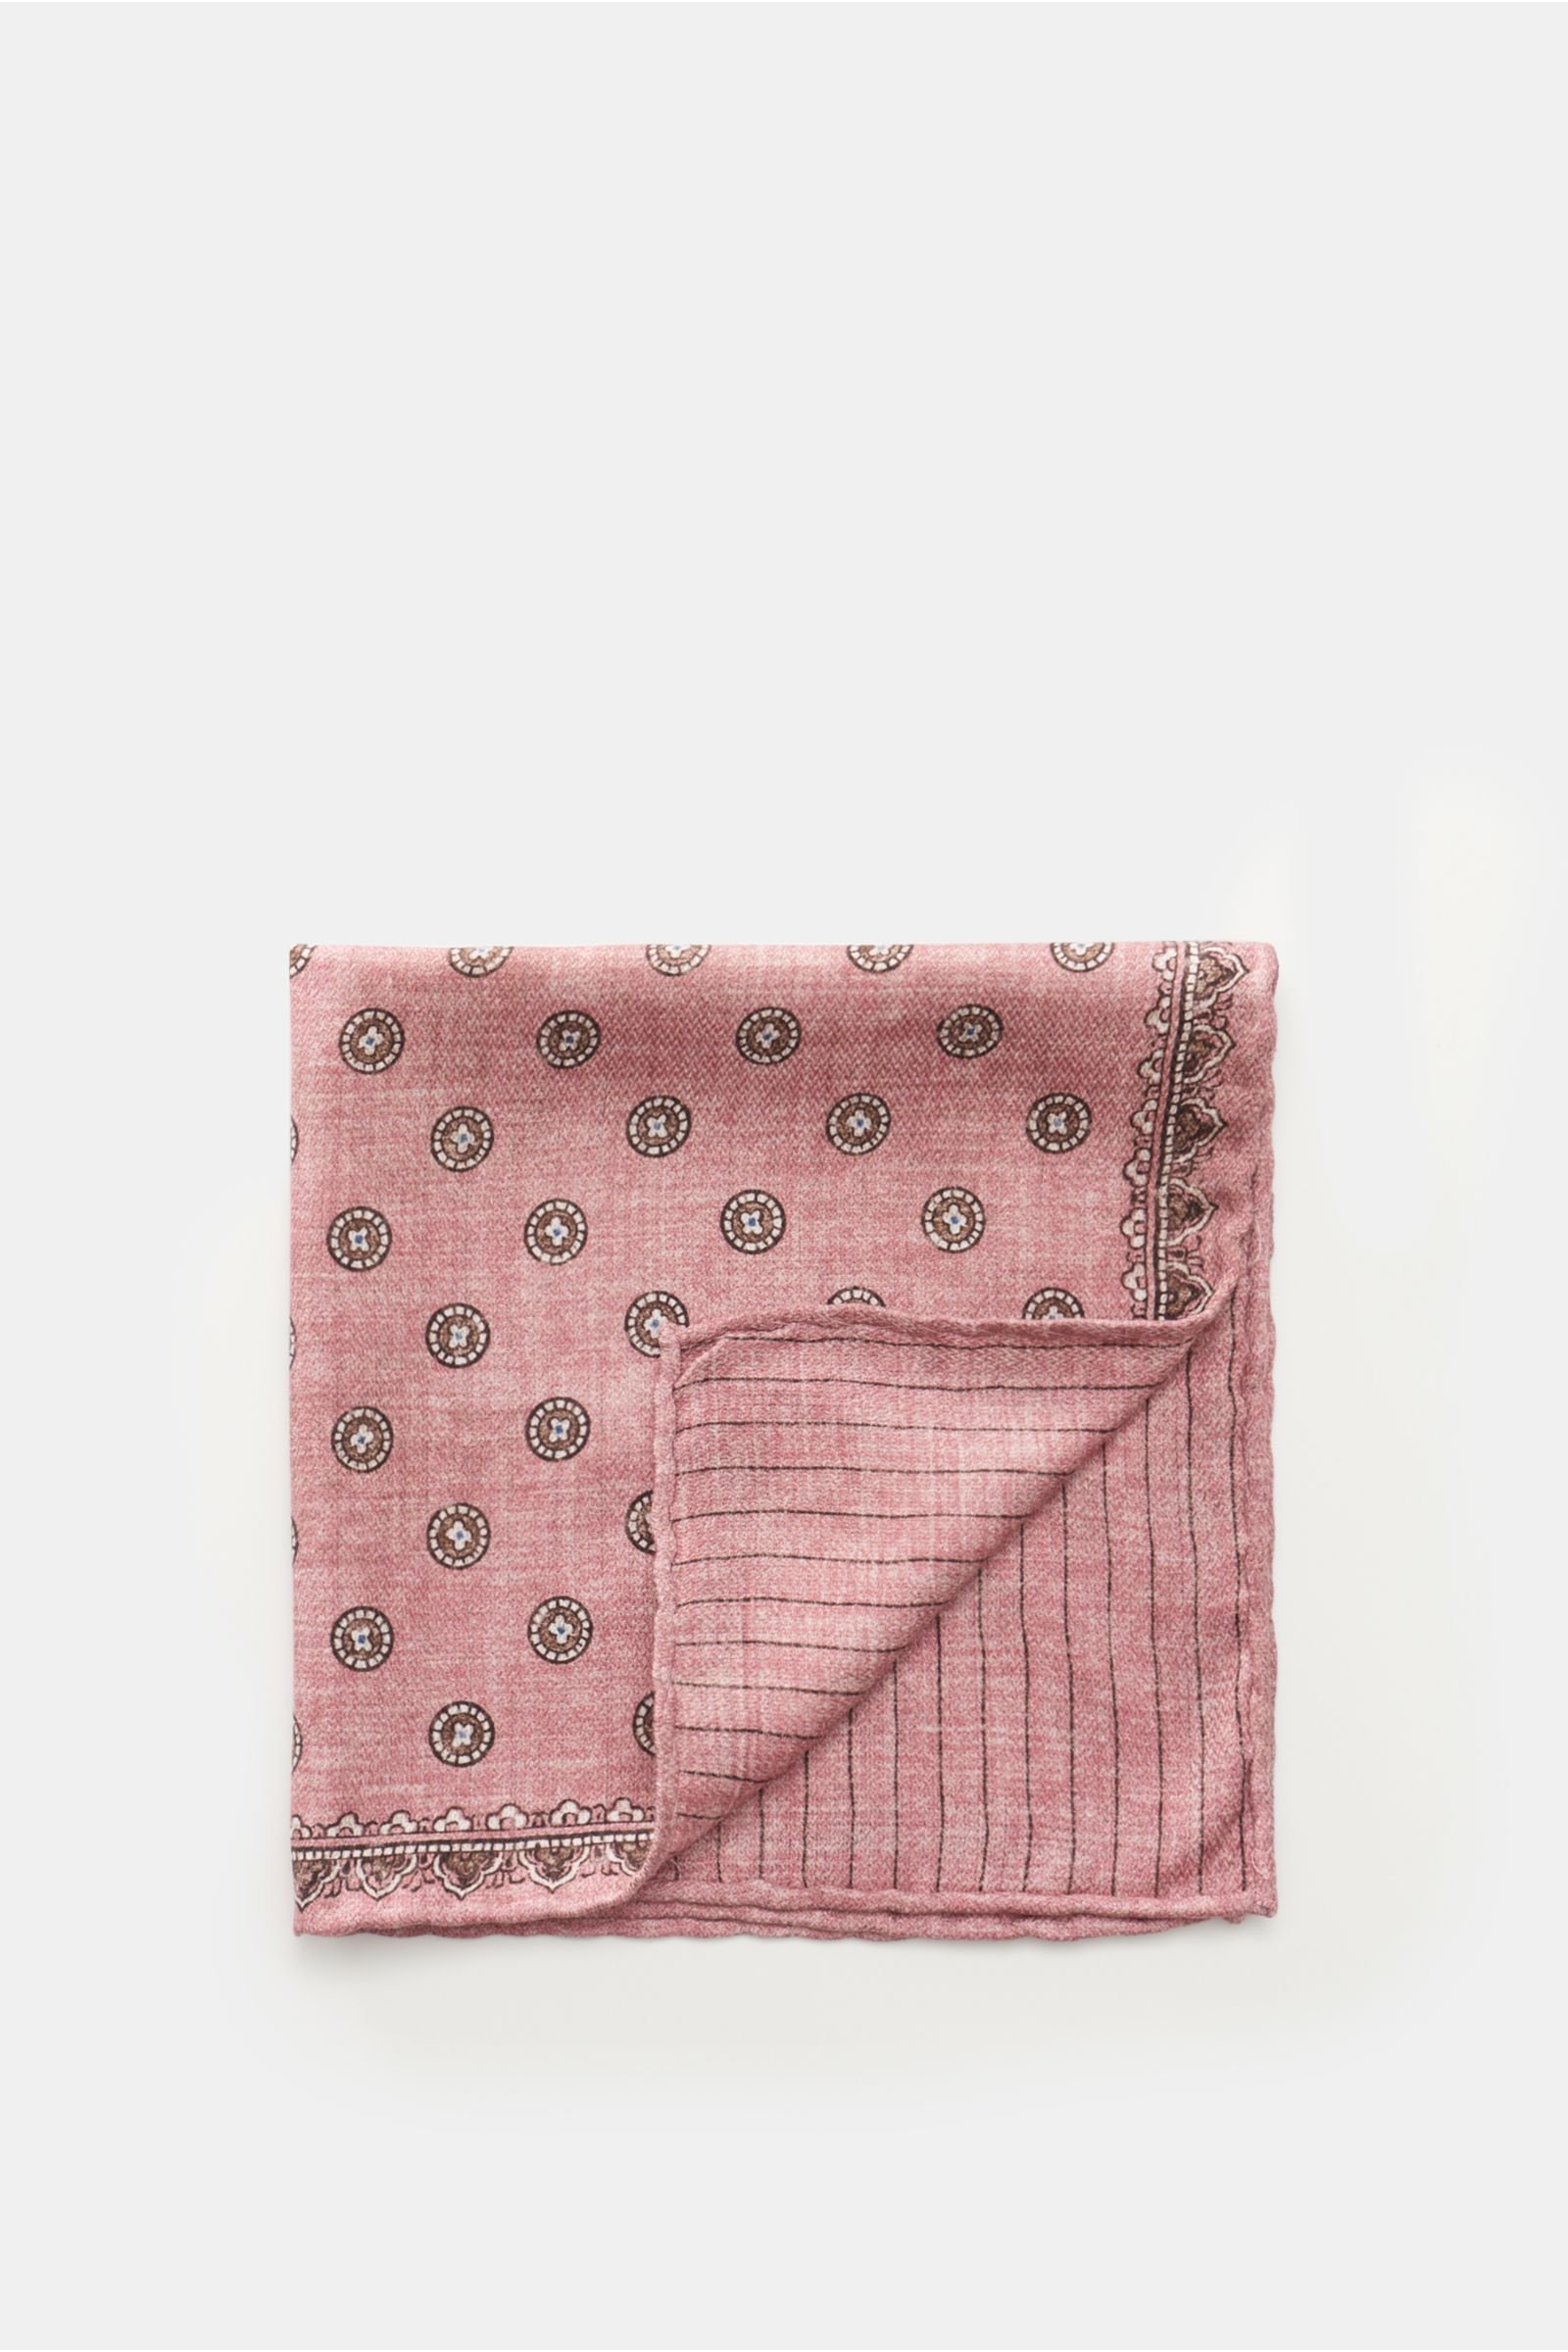 Silk pocket square antique pink/brown/off-white patterned